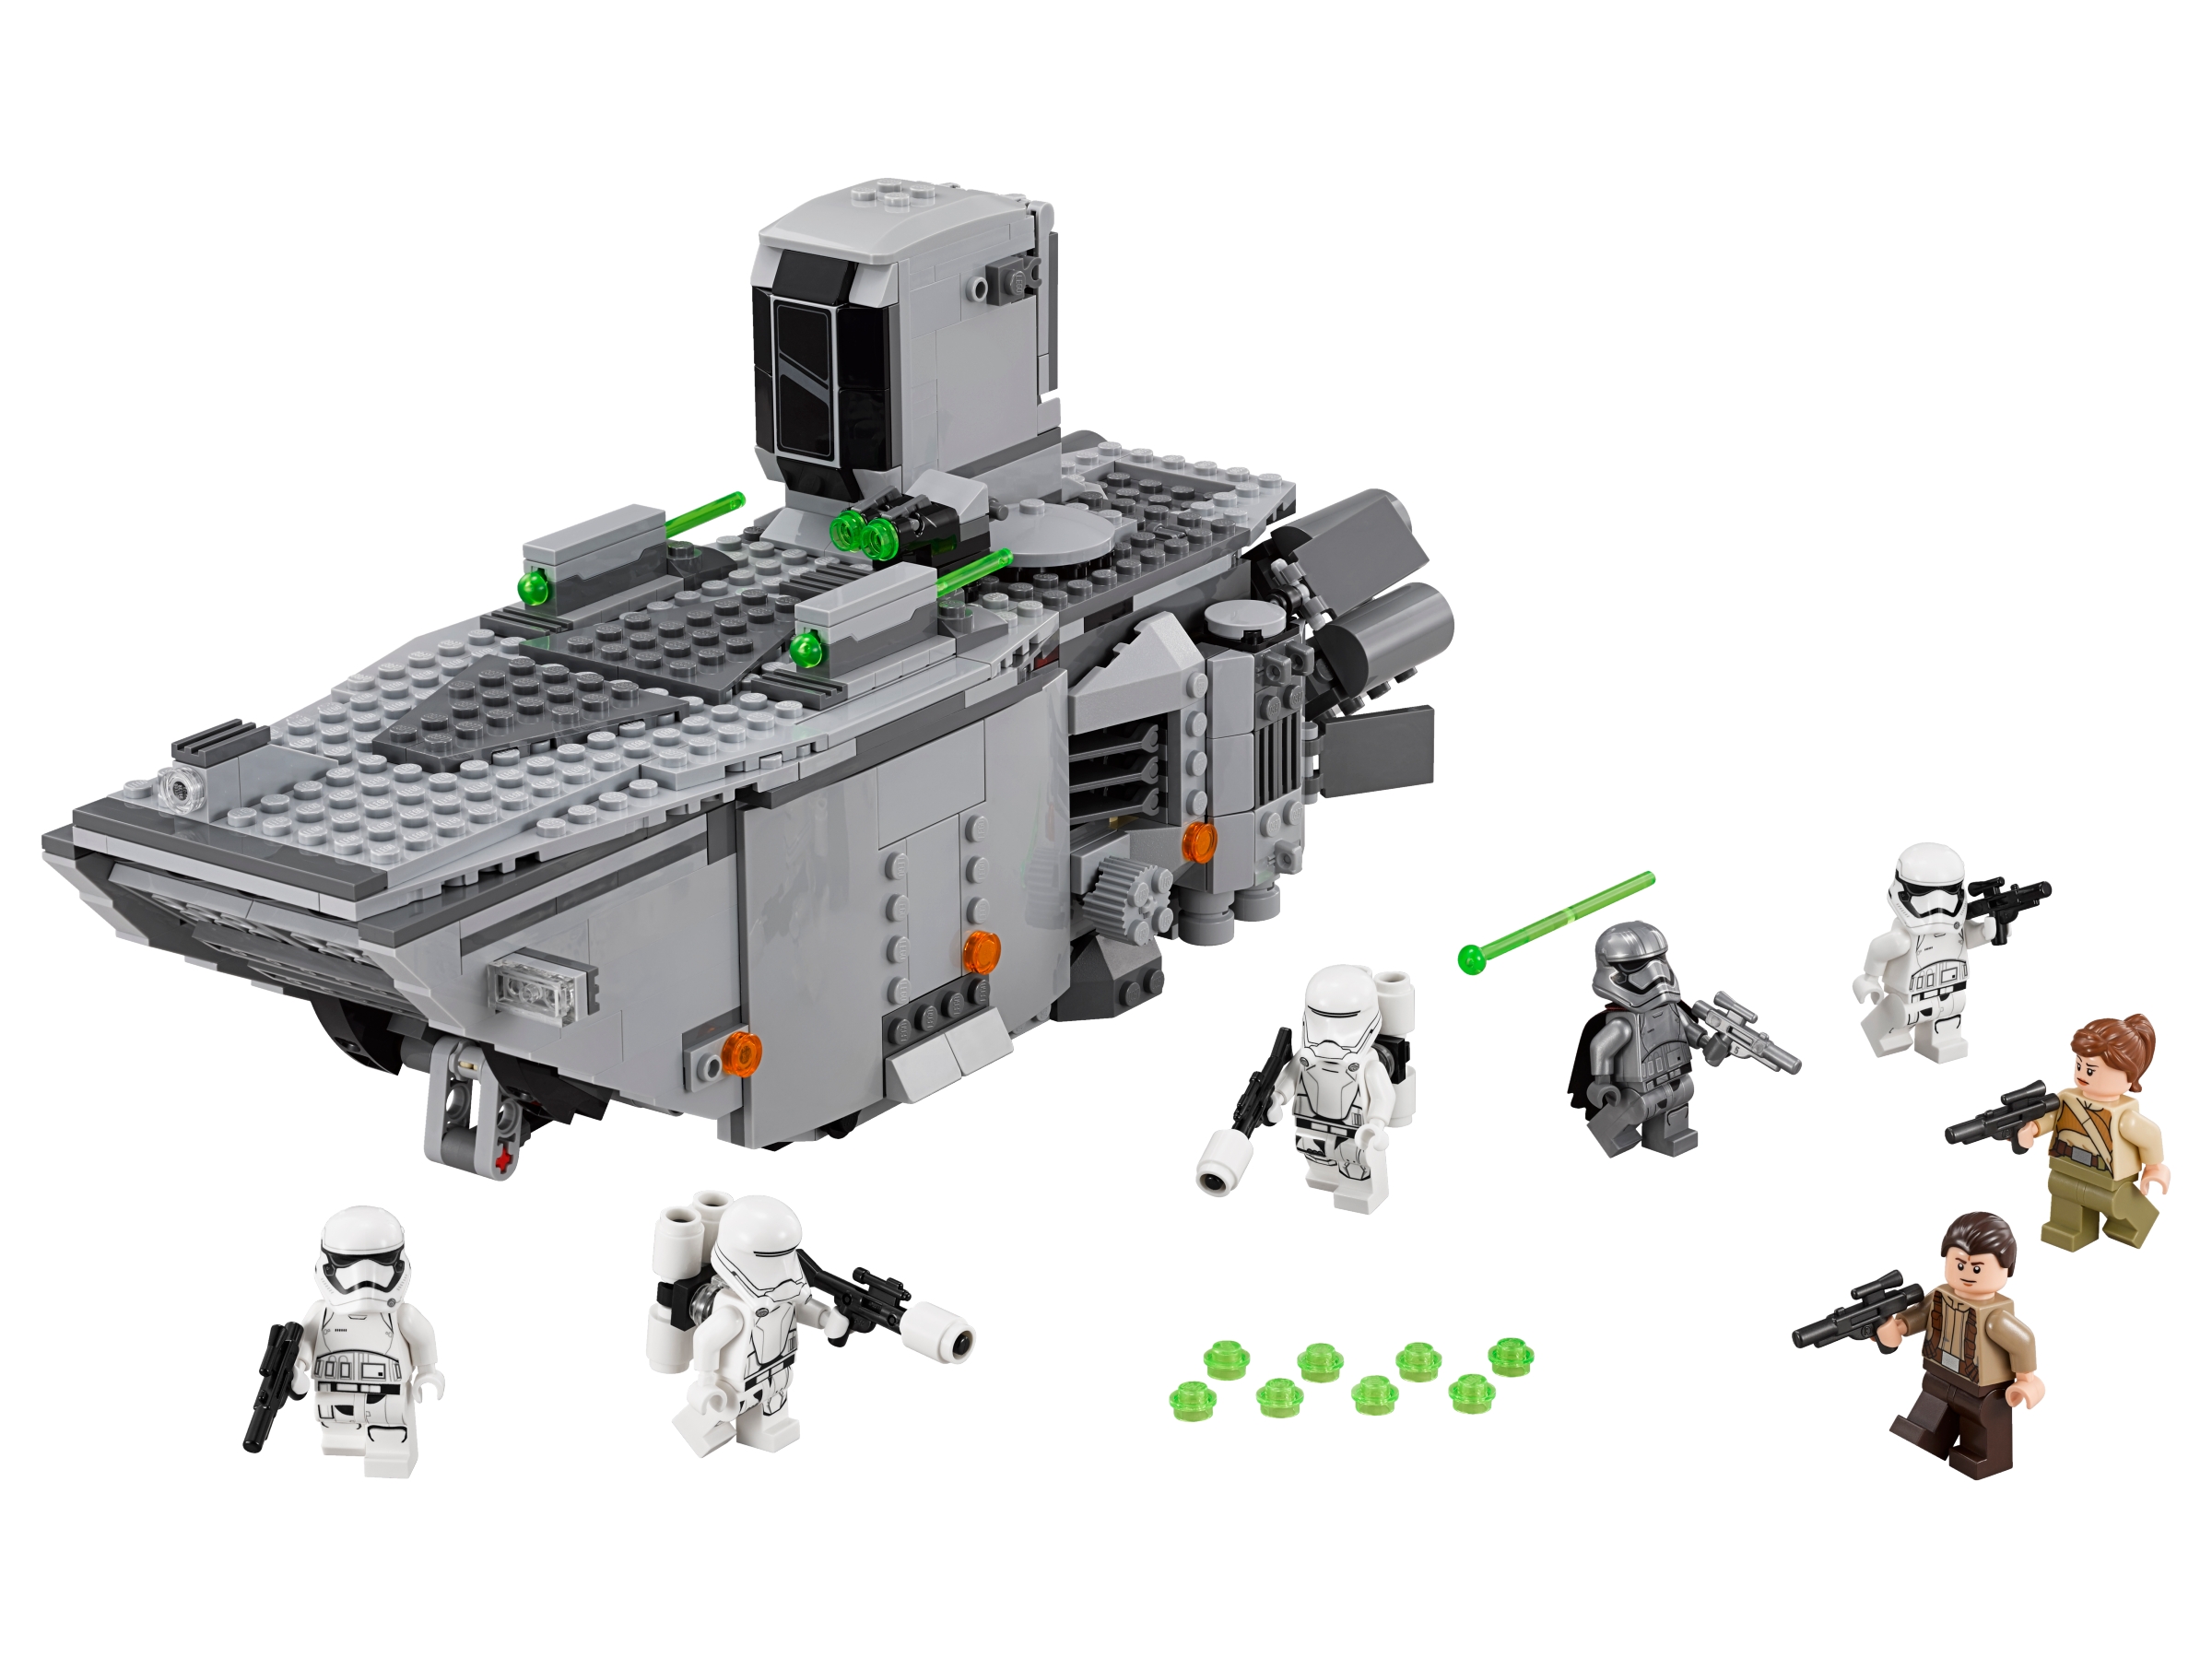 Lego Star Wars Resistance Soldier 75103 Mini Figure 